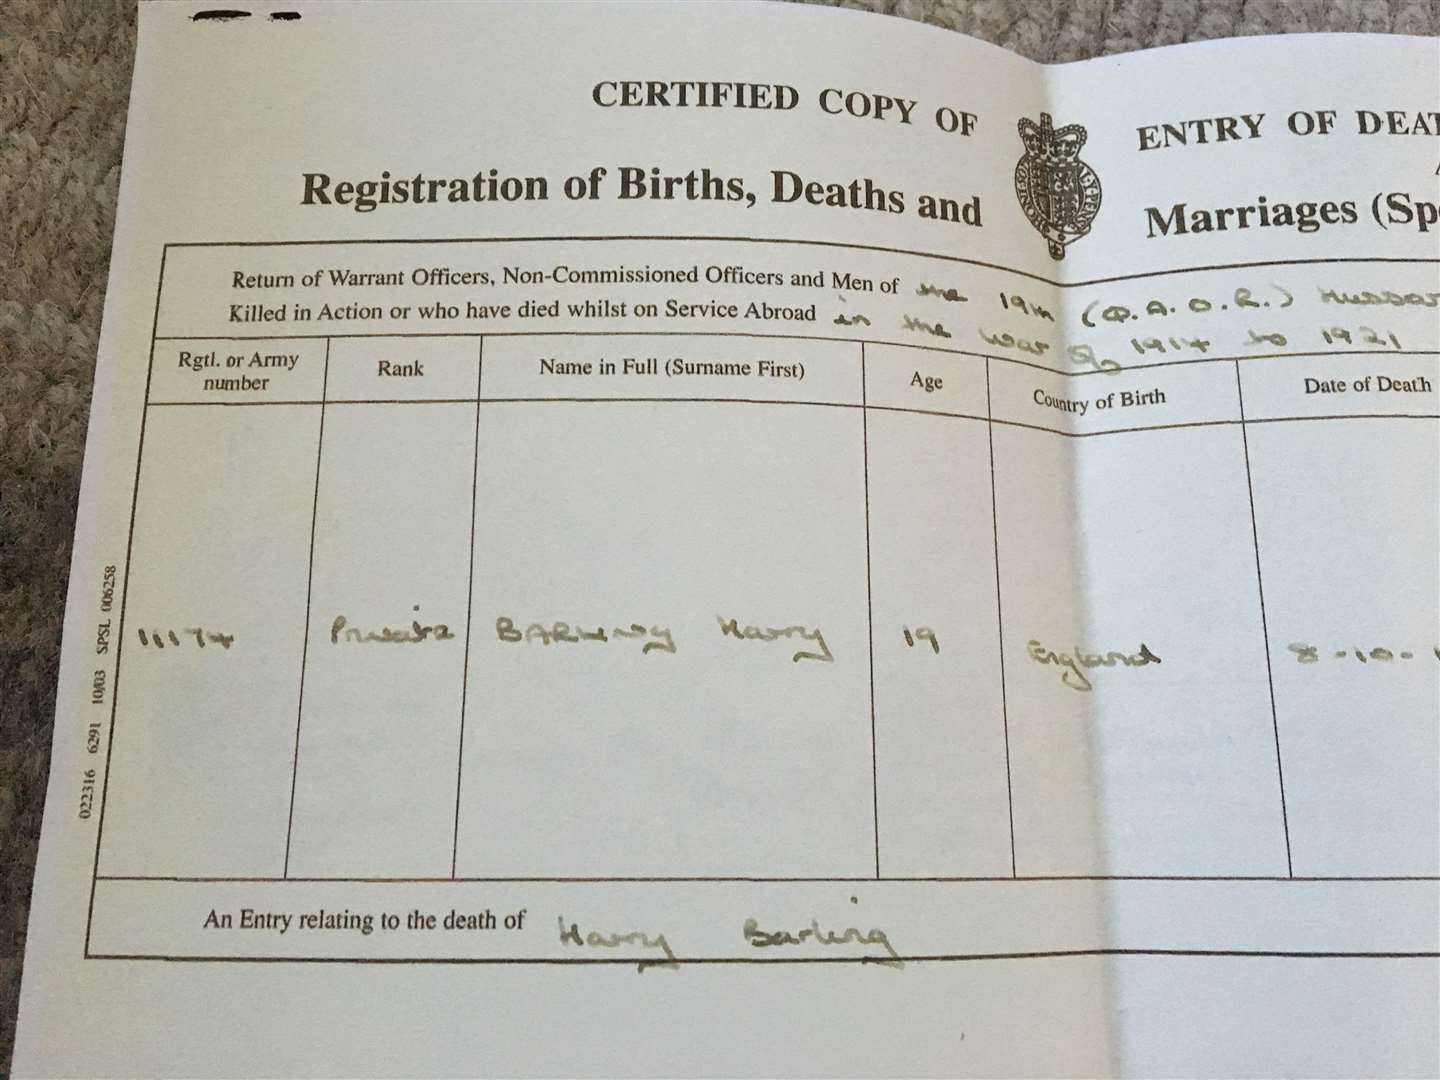 Harry Barling's death certificate